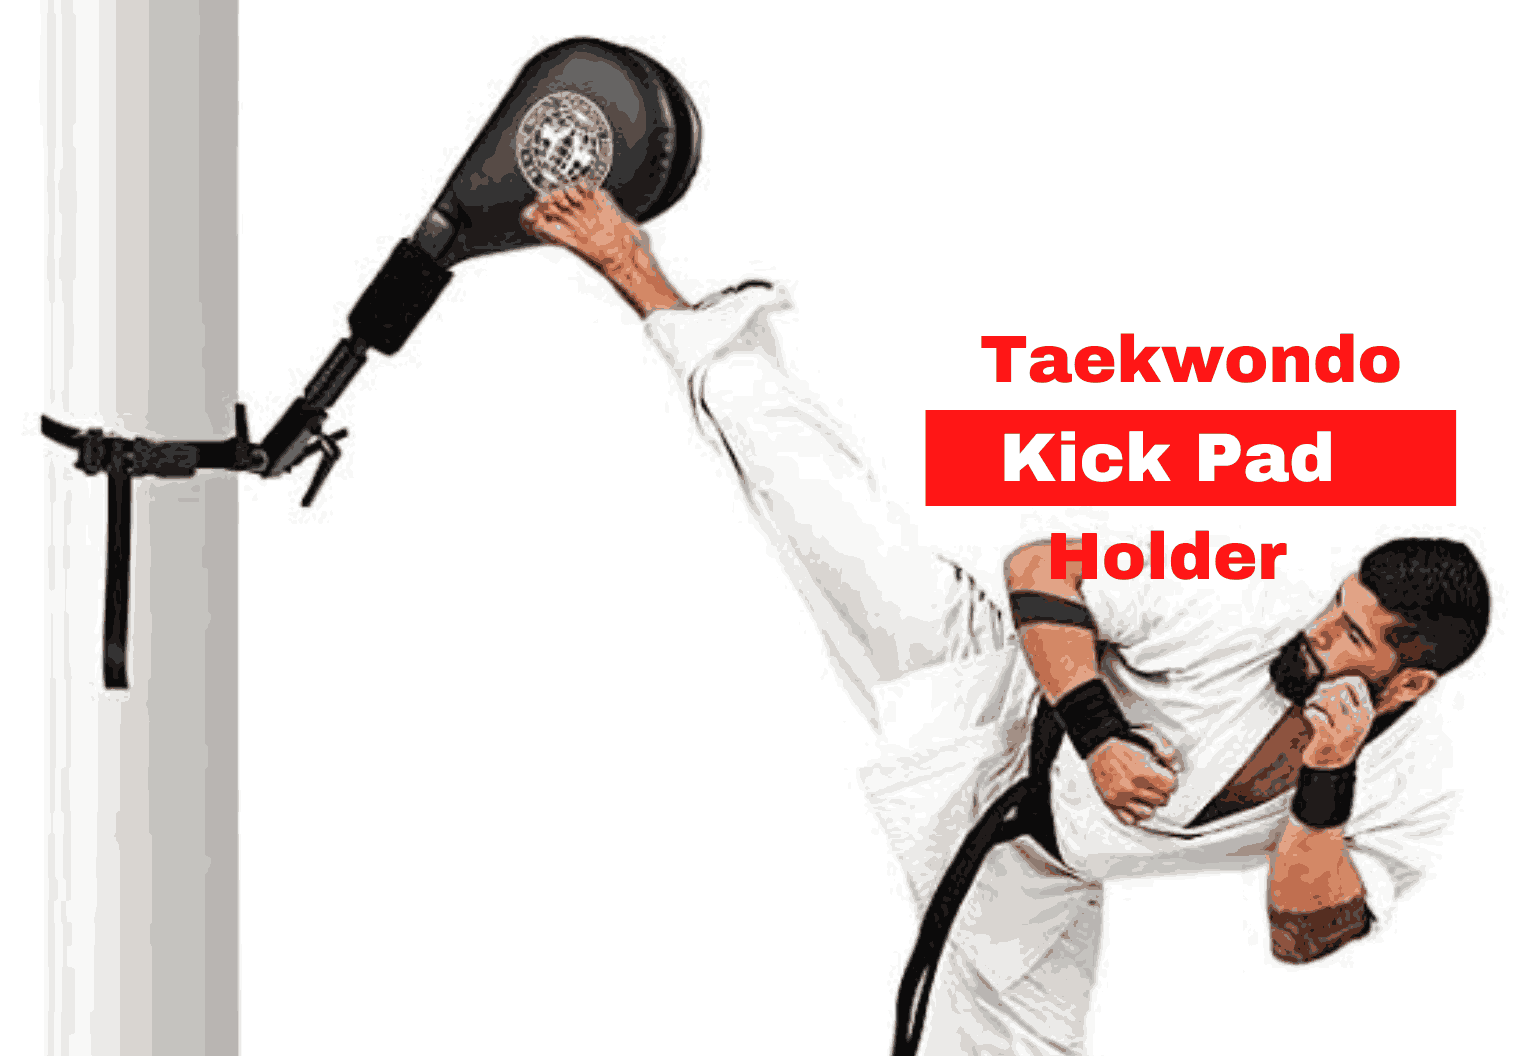 Is Taekwondo Kick Pad Holder Beneficial for a Stronger Kick?